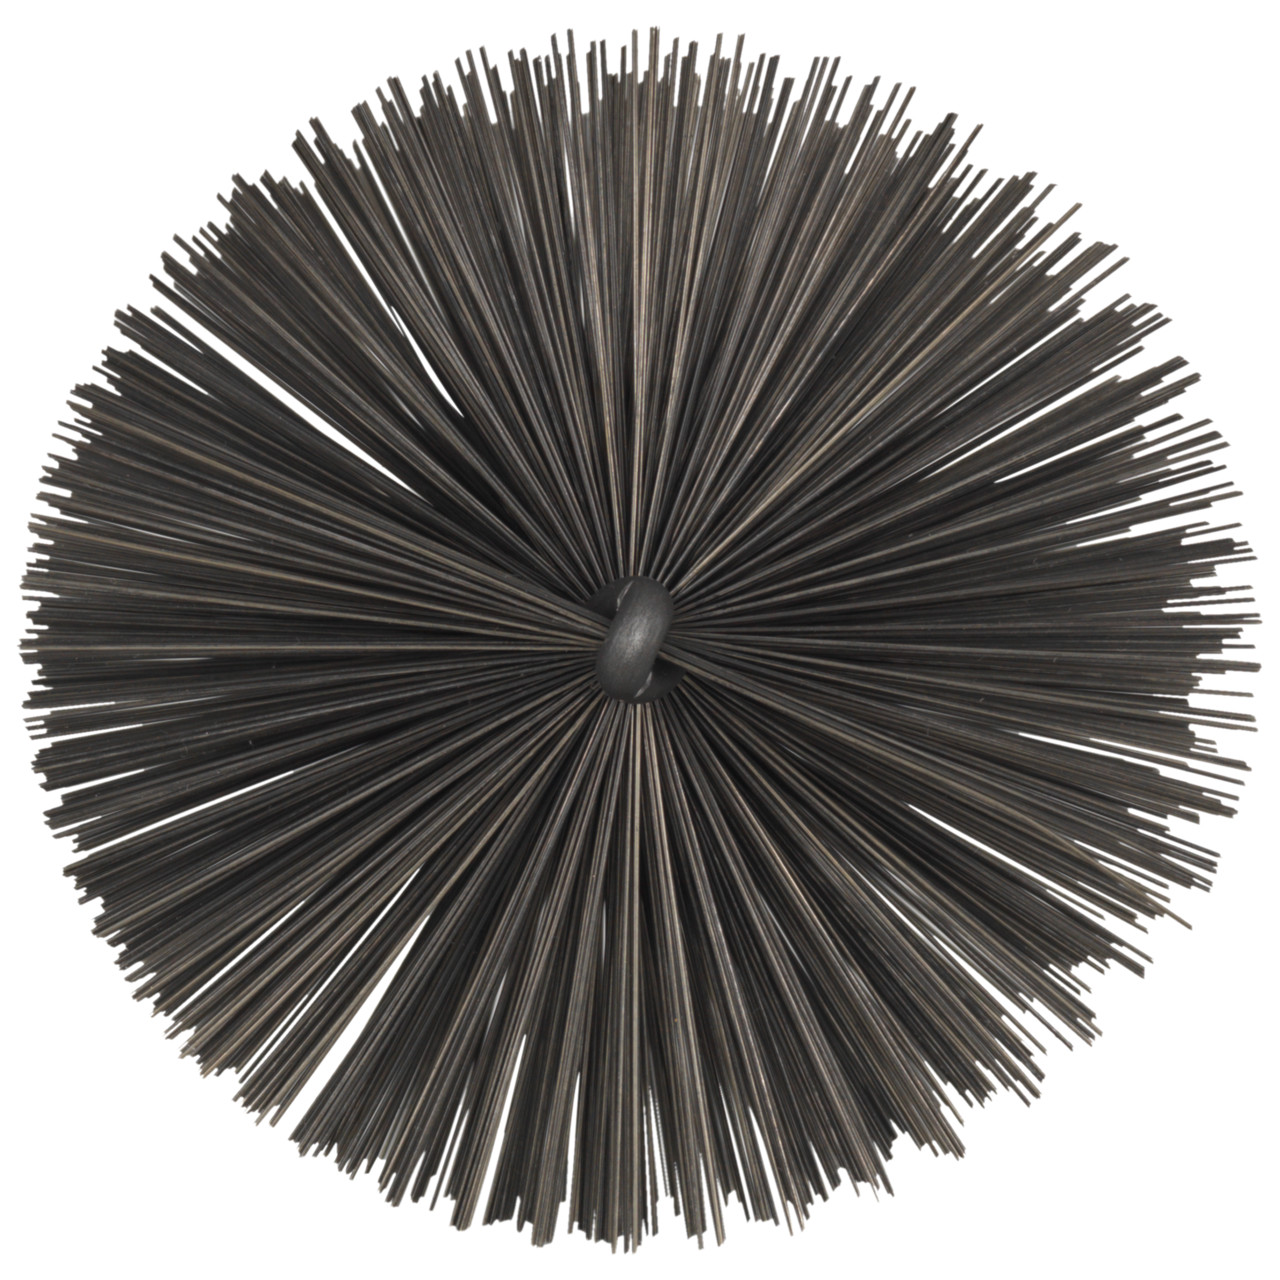 Tyrolit Cepillo para tubos con rosca exterior DxGE-I 101xW1/2-160 Para acero, forma: 18ROGDG - (cepillo para tubos), Art. 34203608